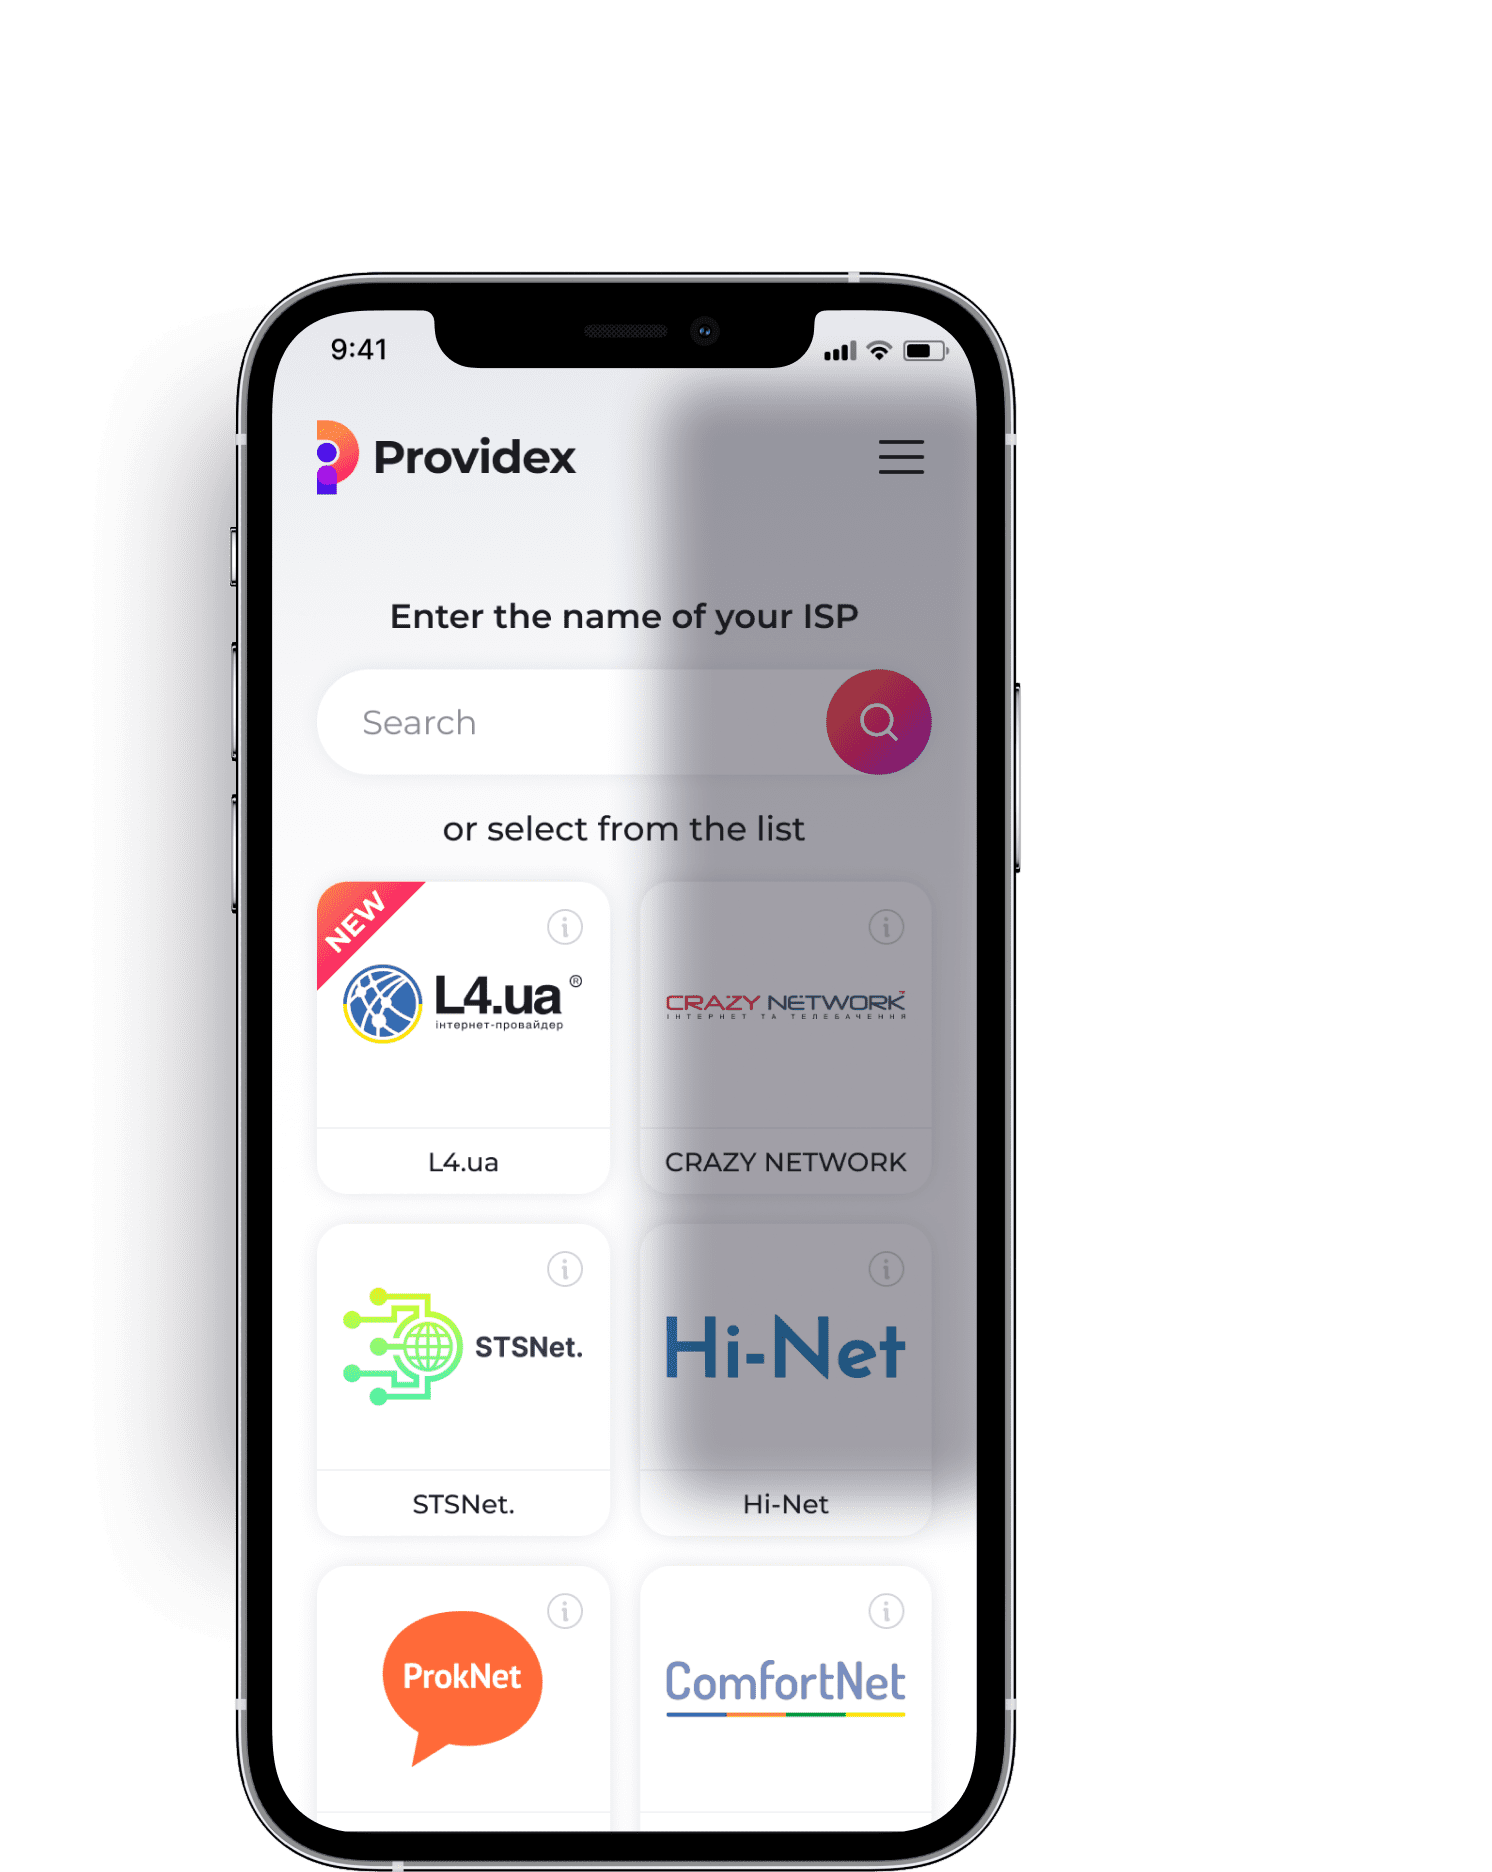 Providex app home screen 2